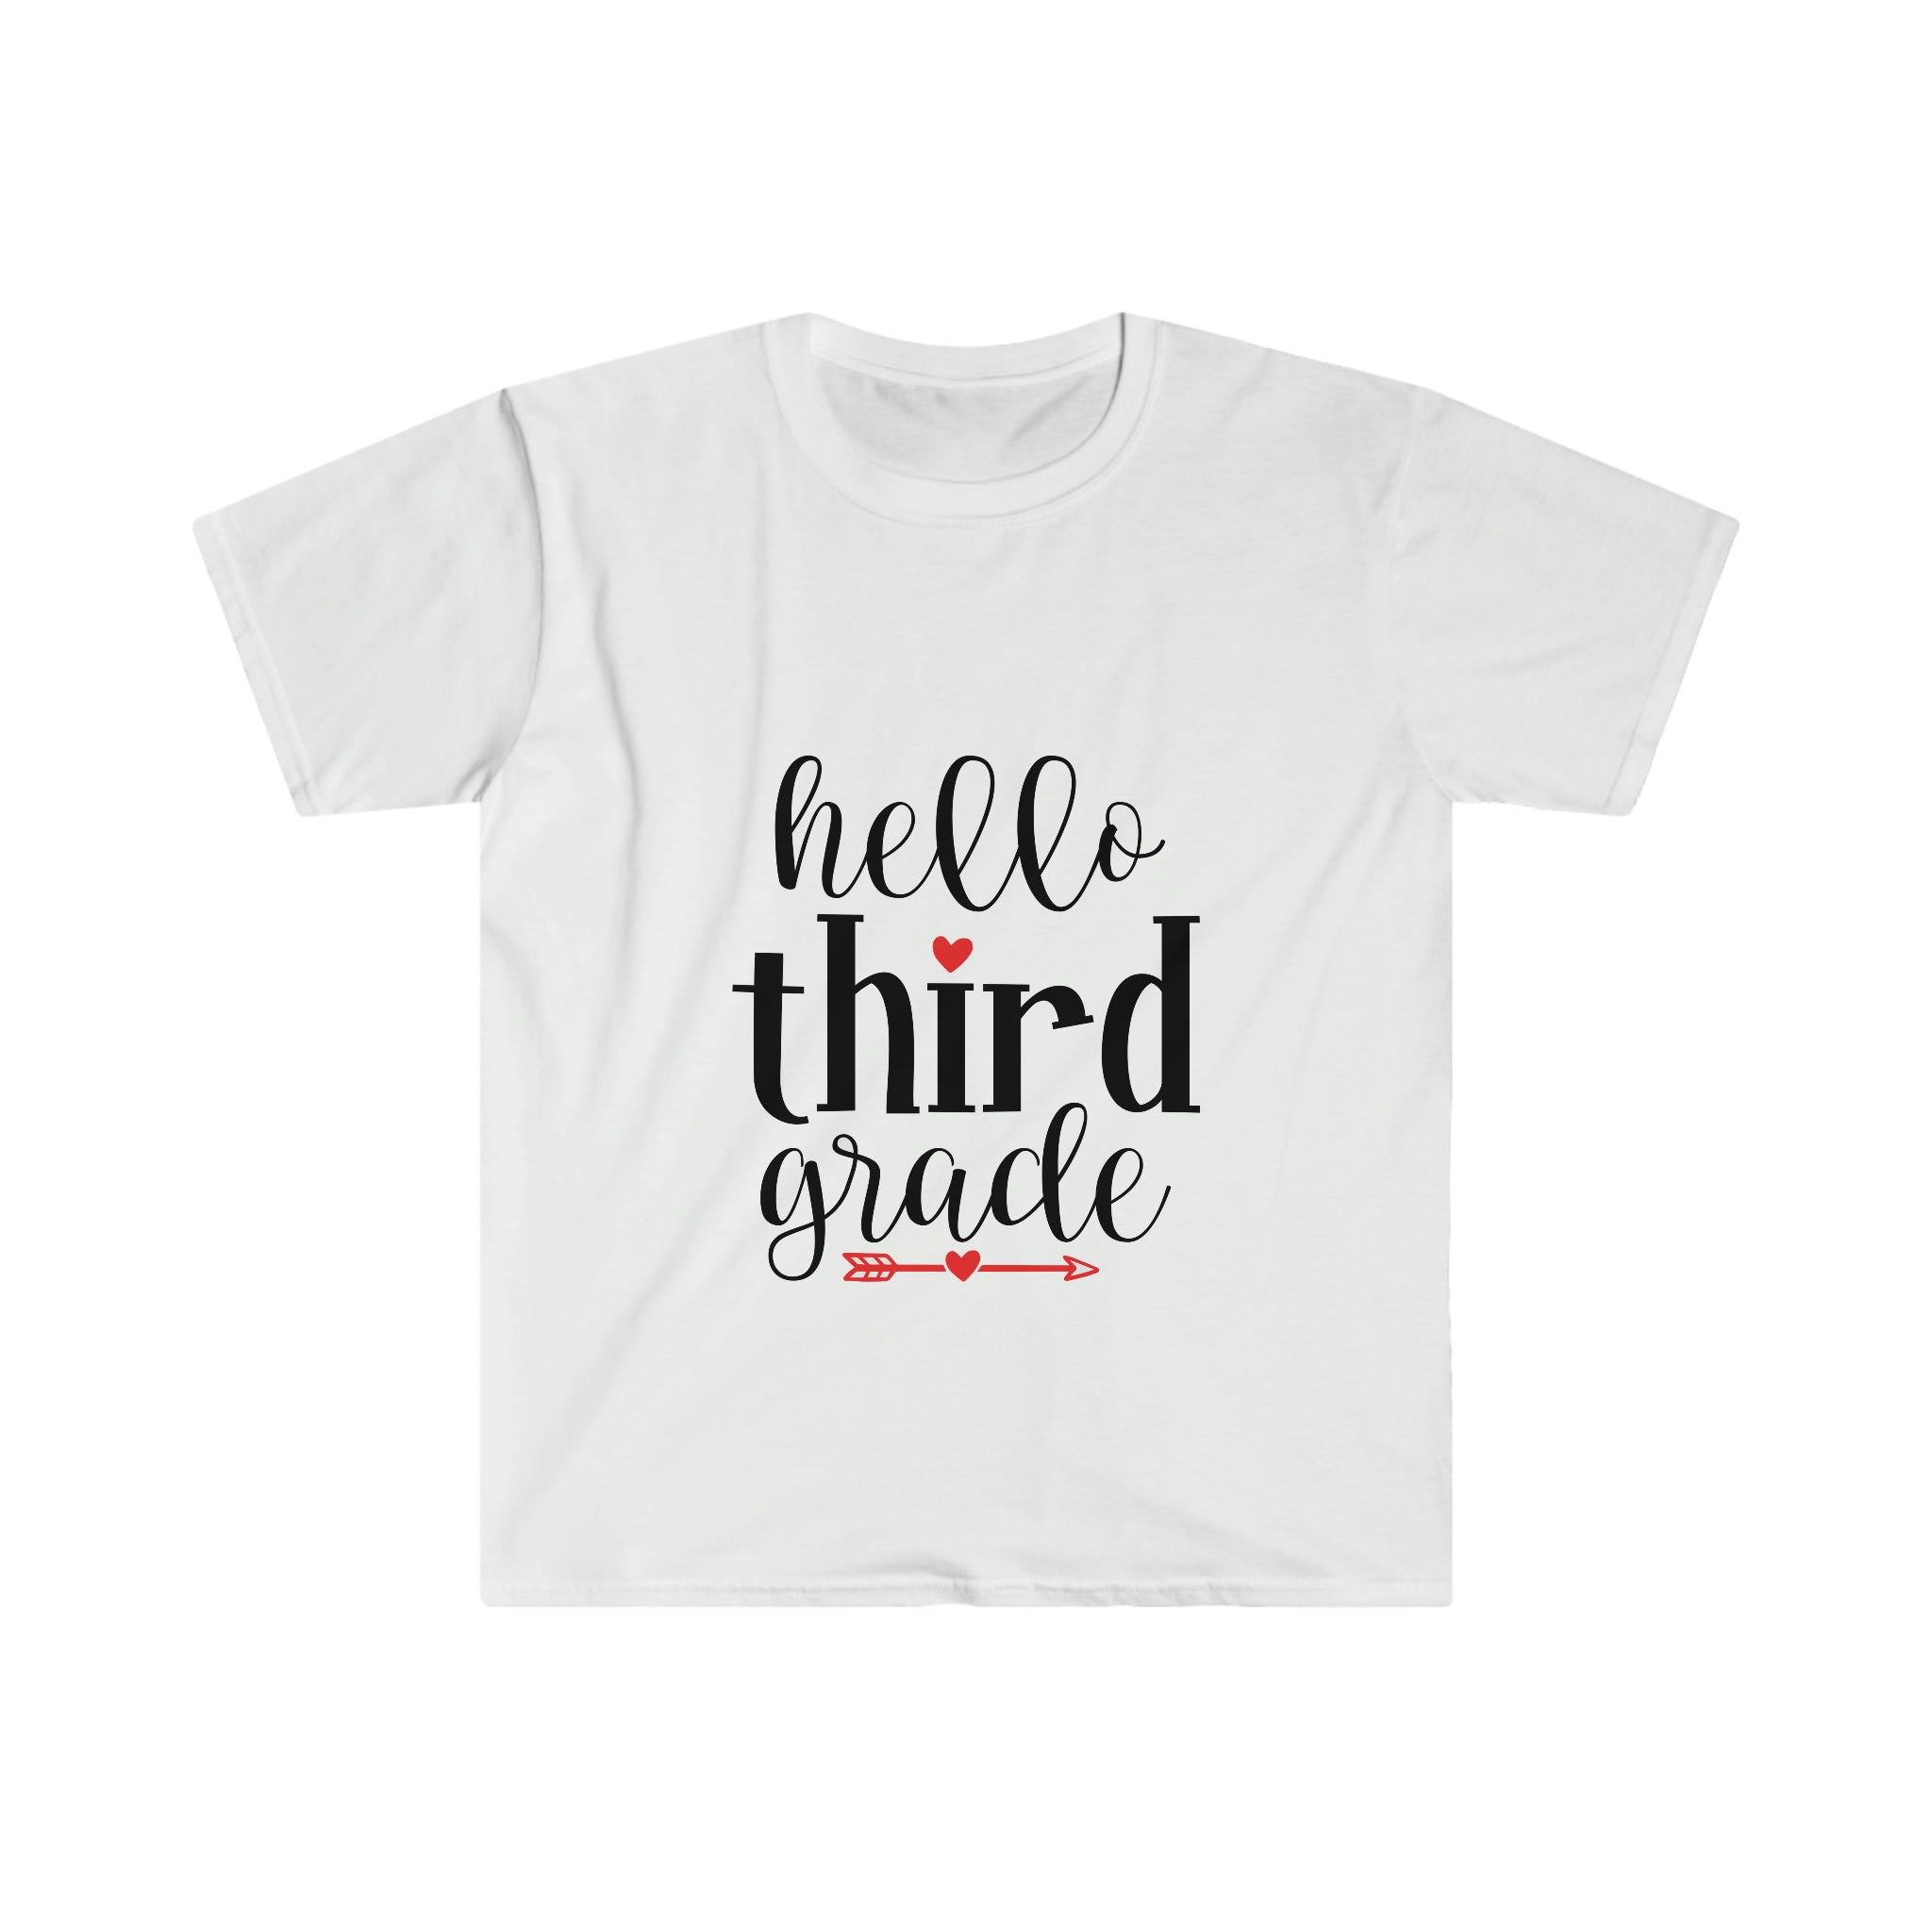 A Hello Third Grade T-Shirt with black text.